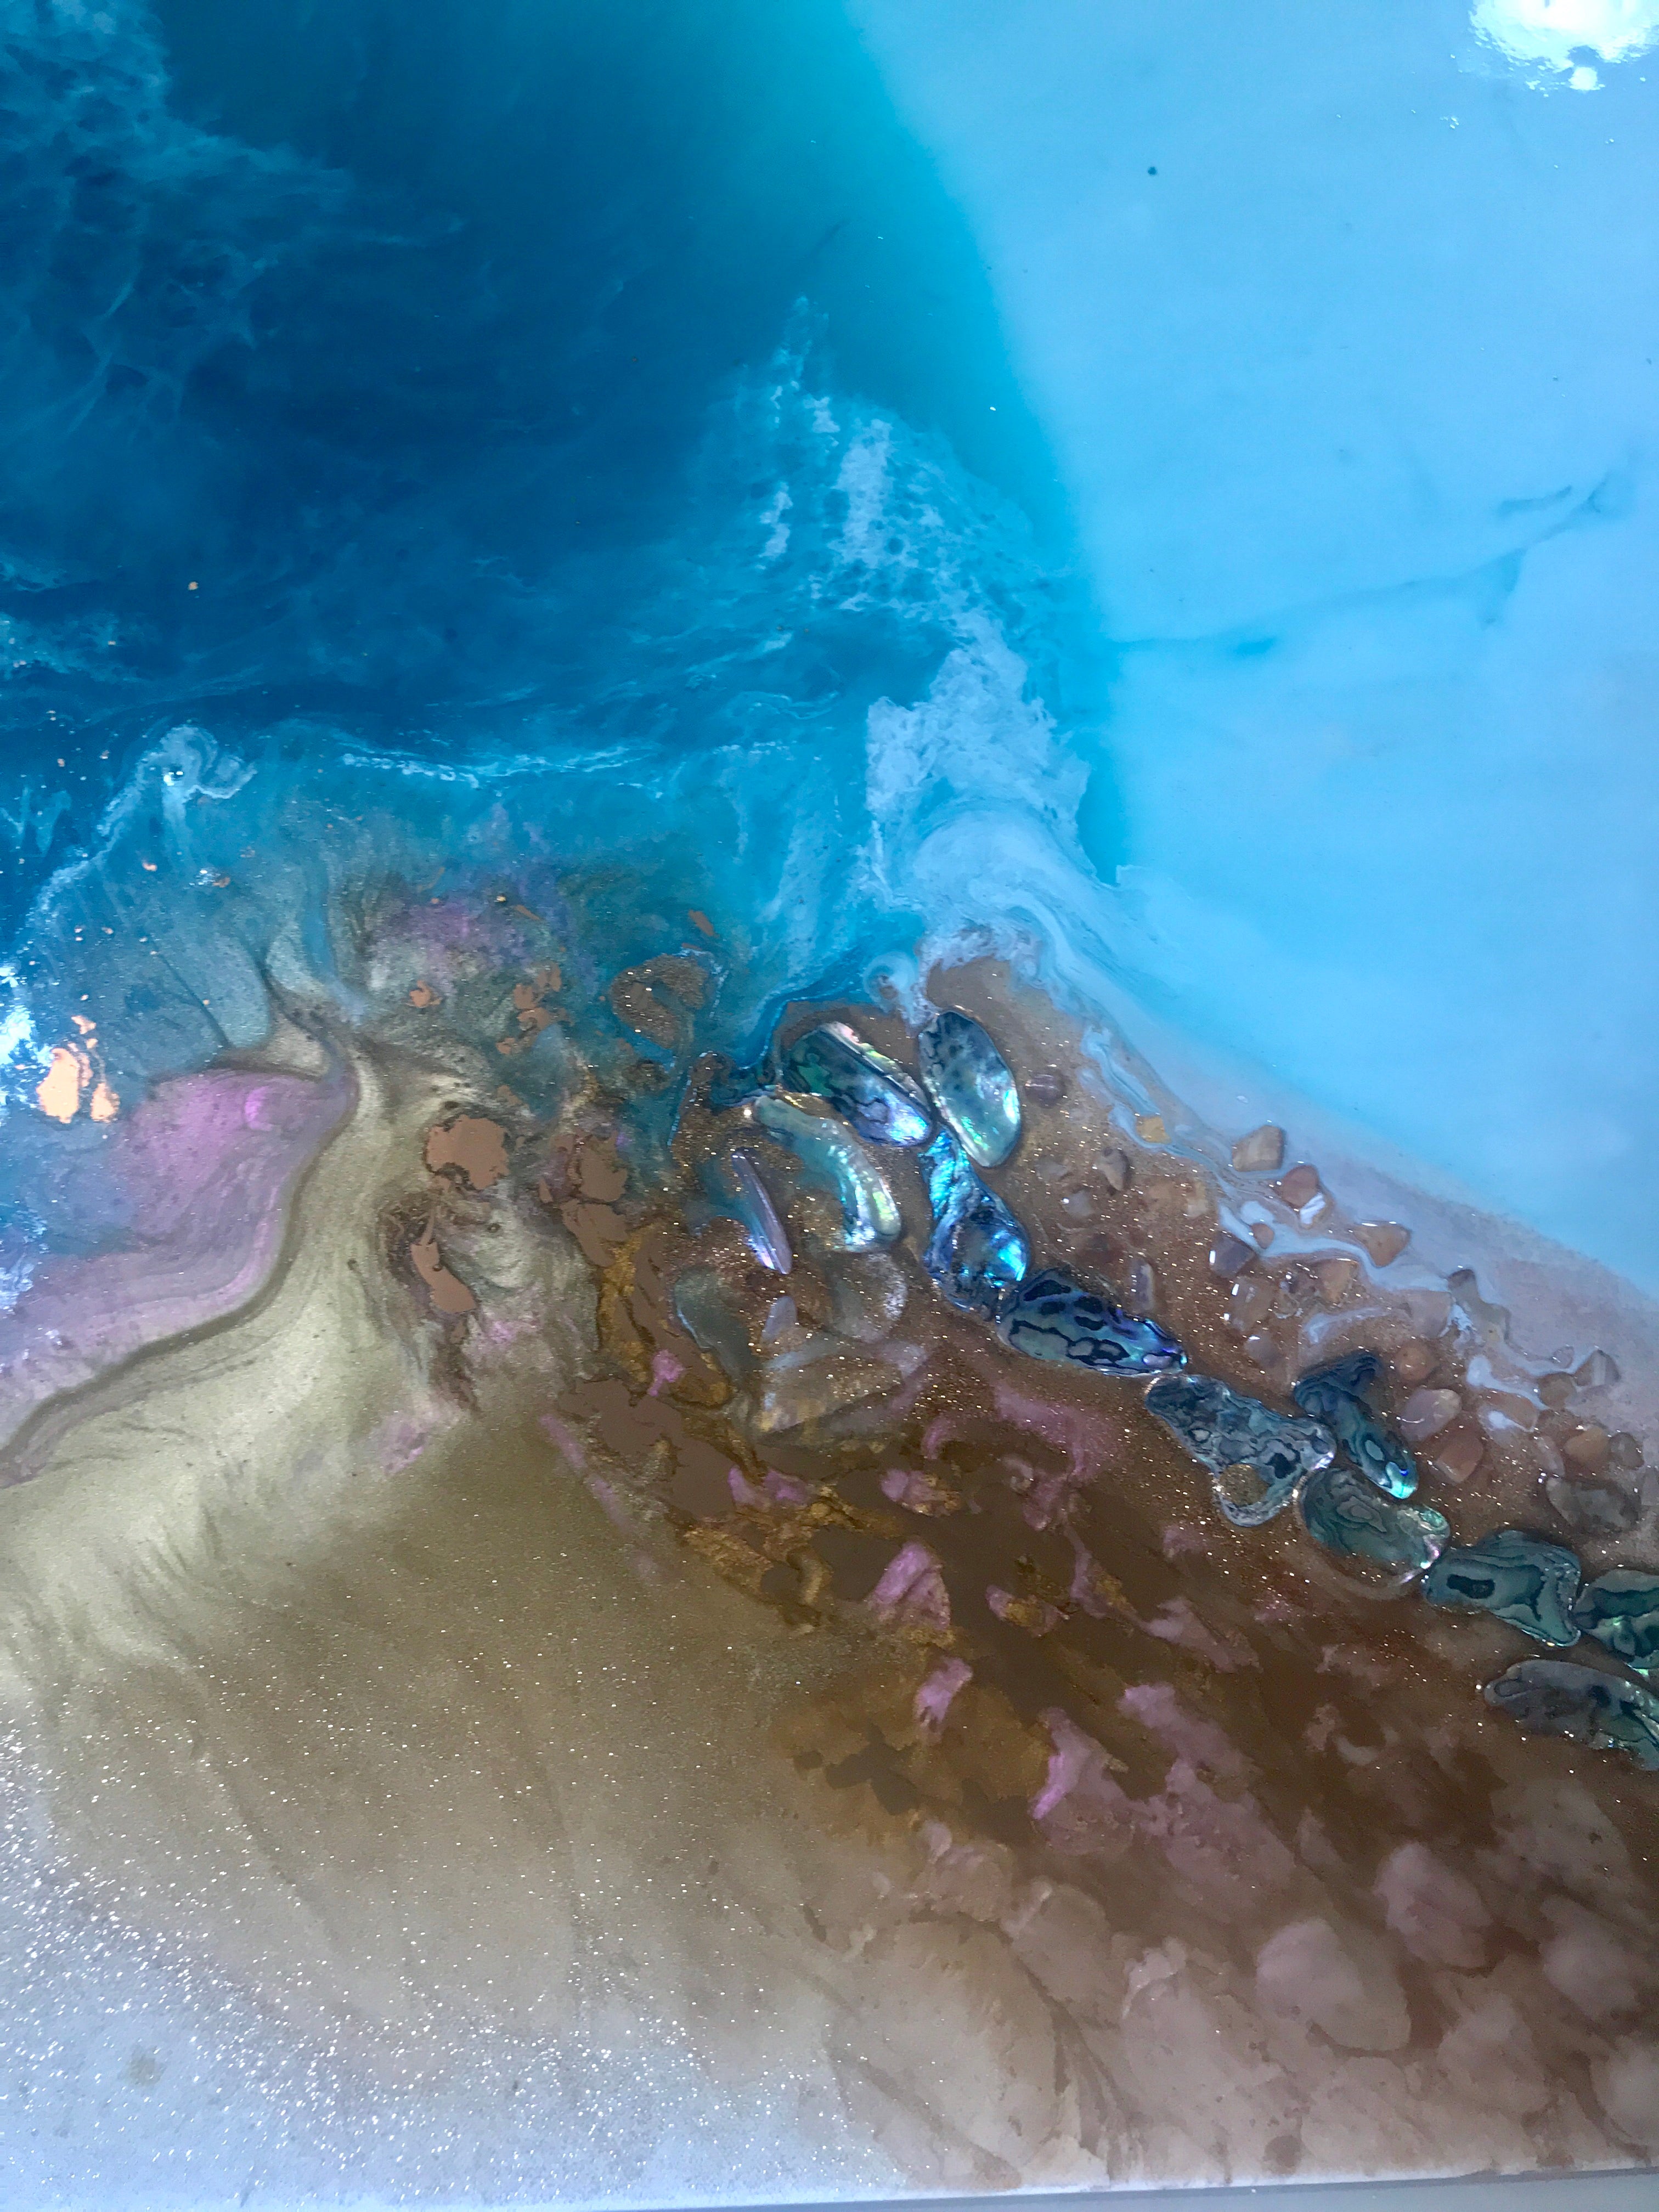 Teal Abstract Artwork. Ocean Blue. Aqua Bliss. Antuanelle 6 Abstract. Original 100x100cm